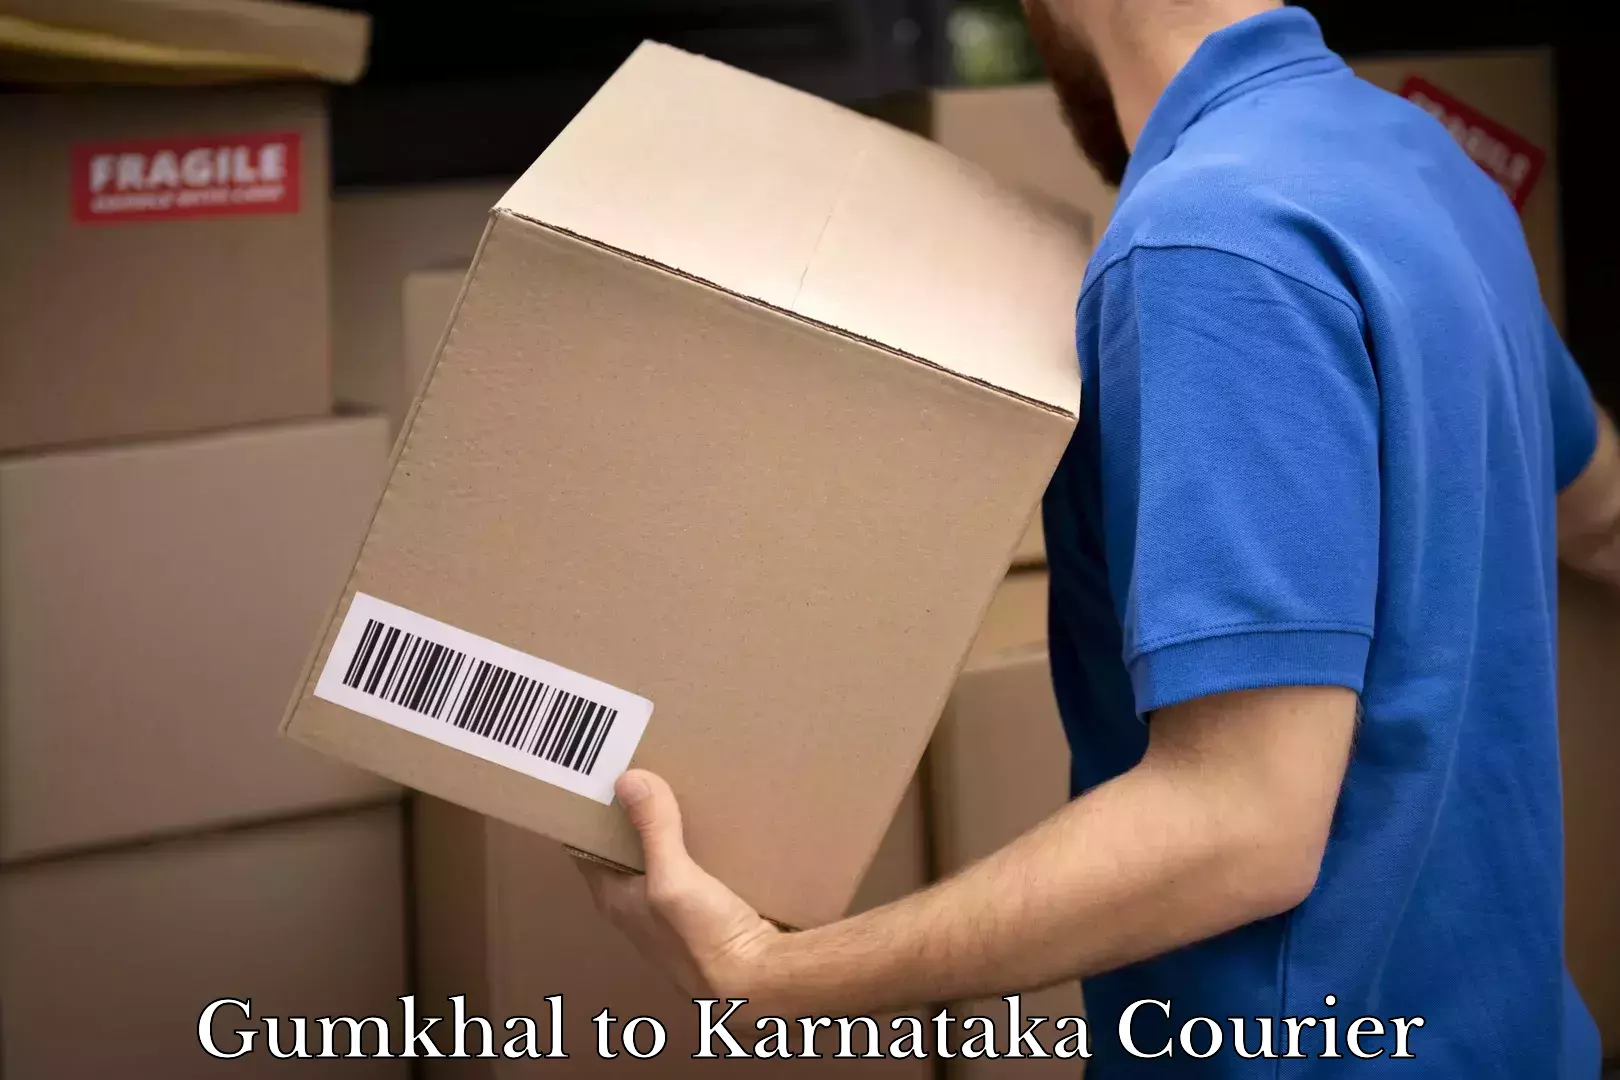 On-call courier service Gumkhal to Karnataka